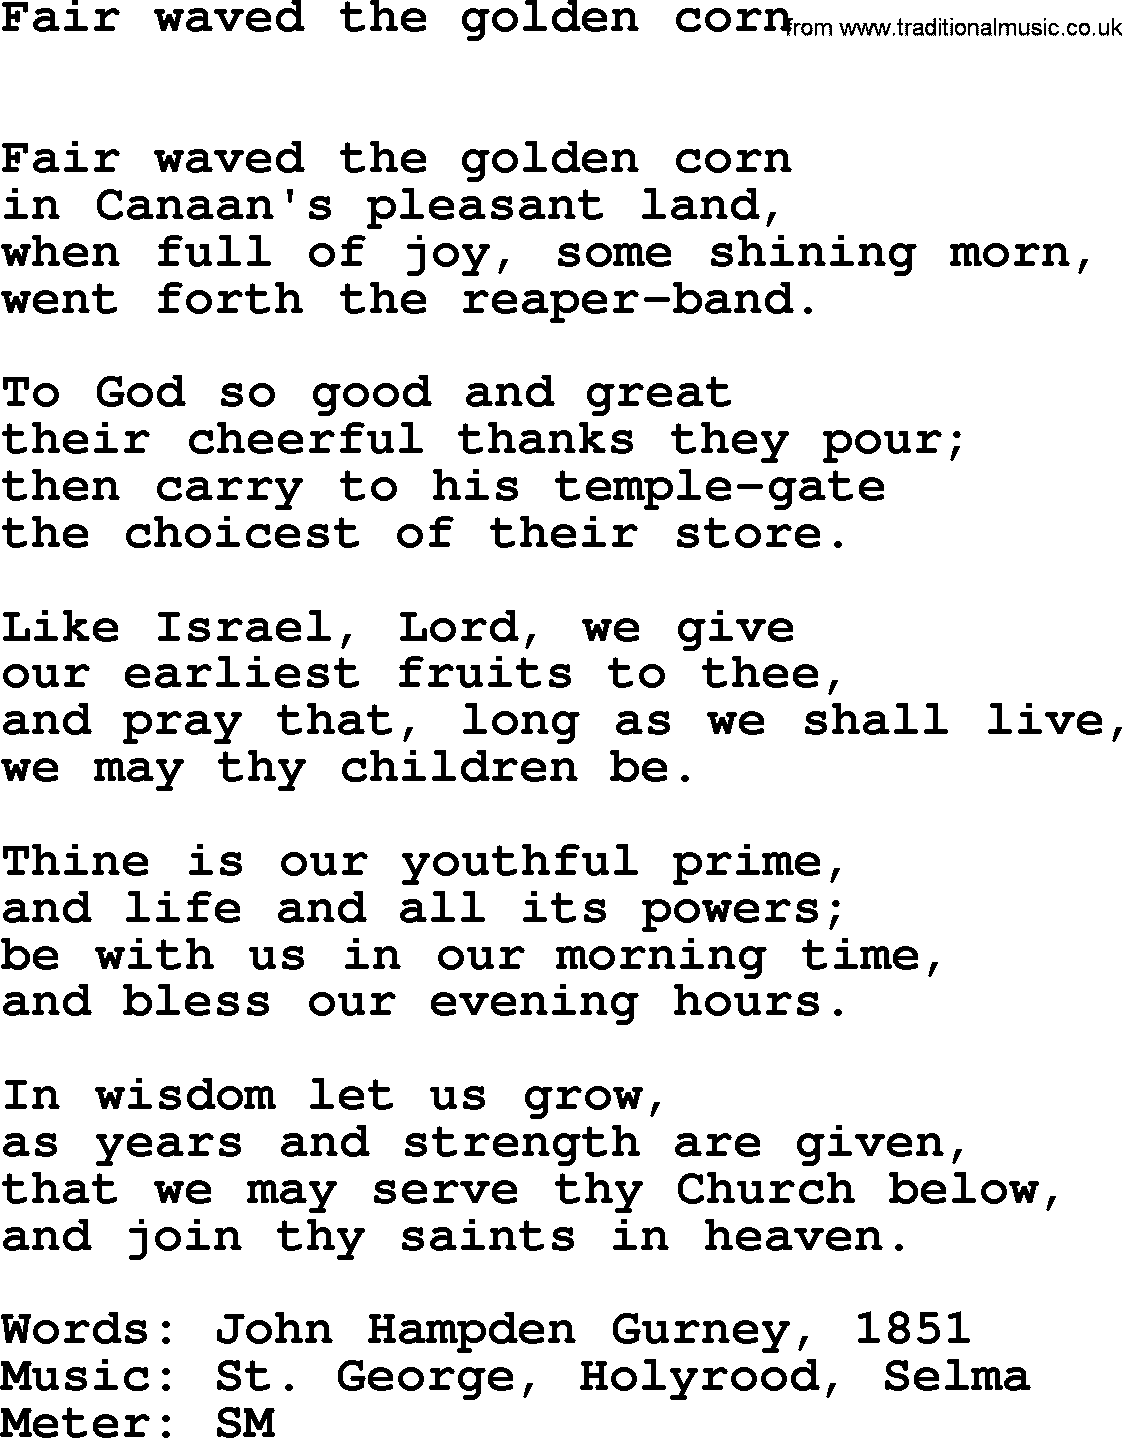 Book of Common Praise Hymn: Fair Waved The Golden Corn.txt lyrics with midi music